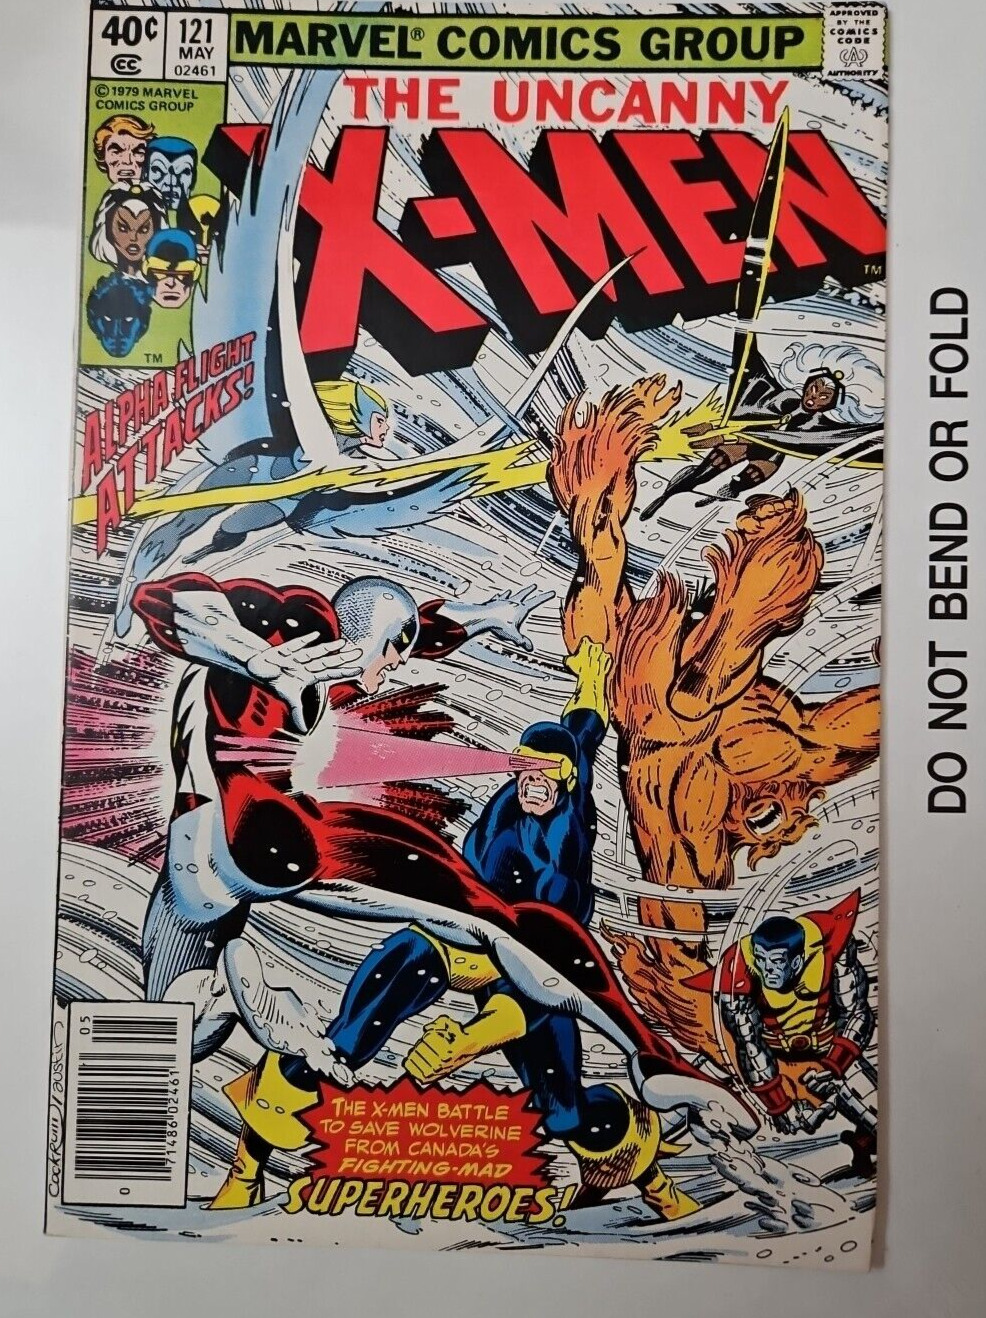 🔥The Uncanny X-MEN #121 Alpha Flight 1st Appearance🔑Newsstand 1979 Marvel